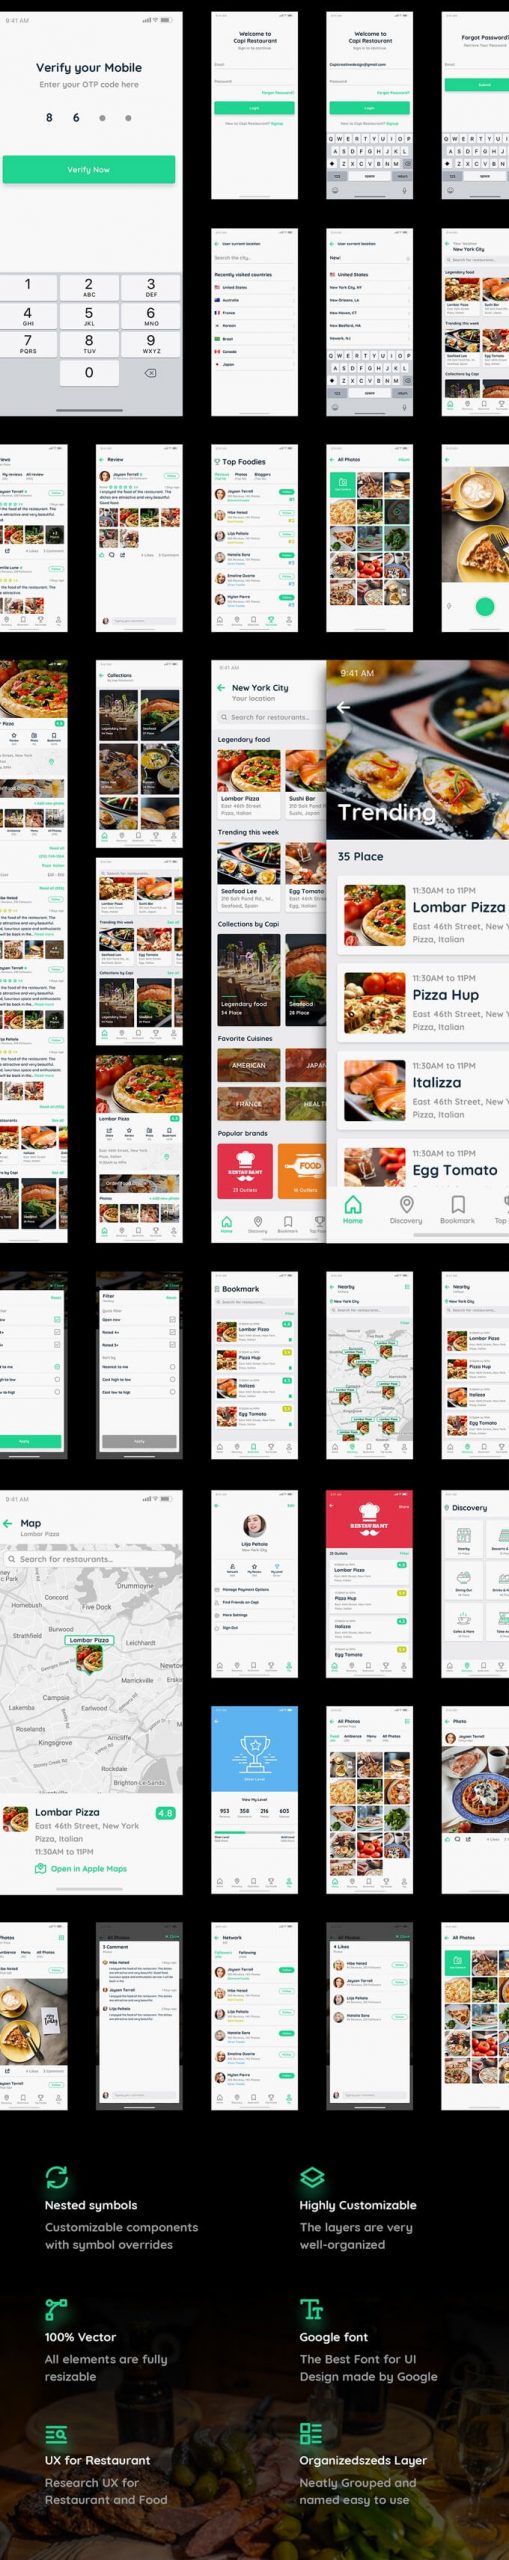 Capi Restaurant iOS UI Kit